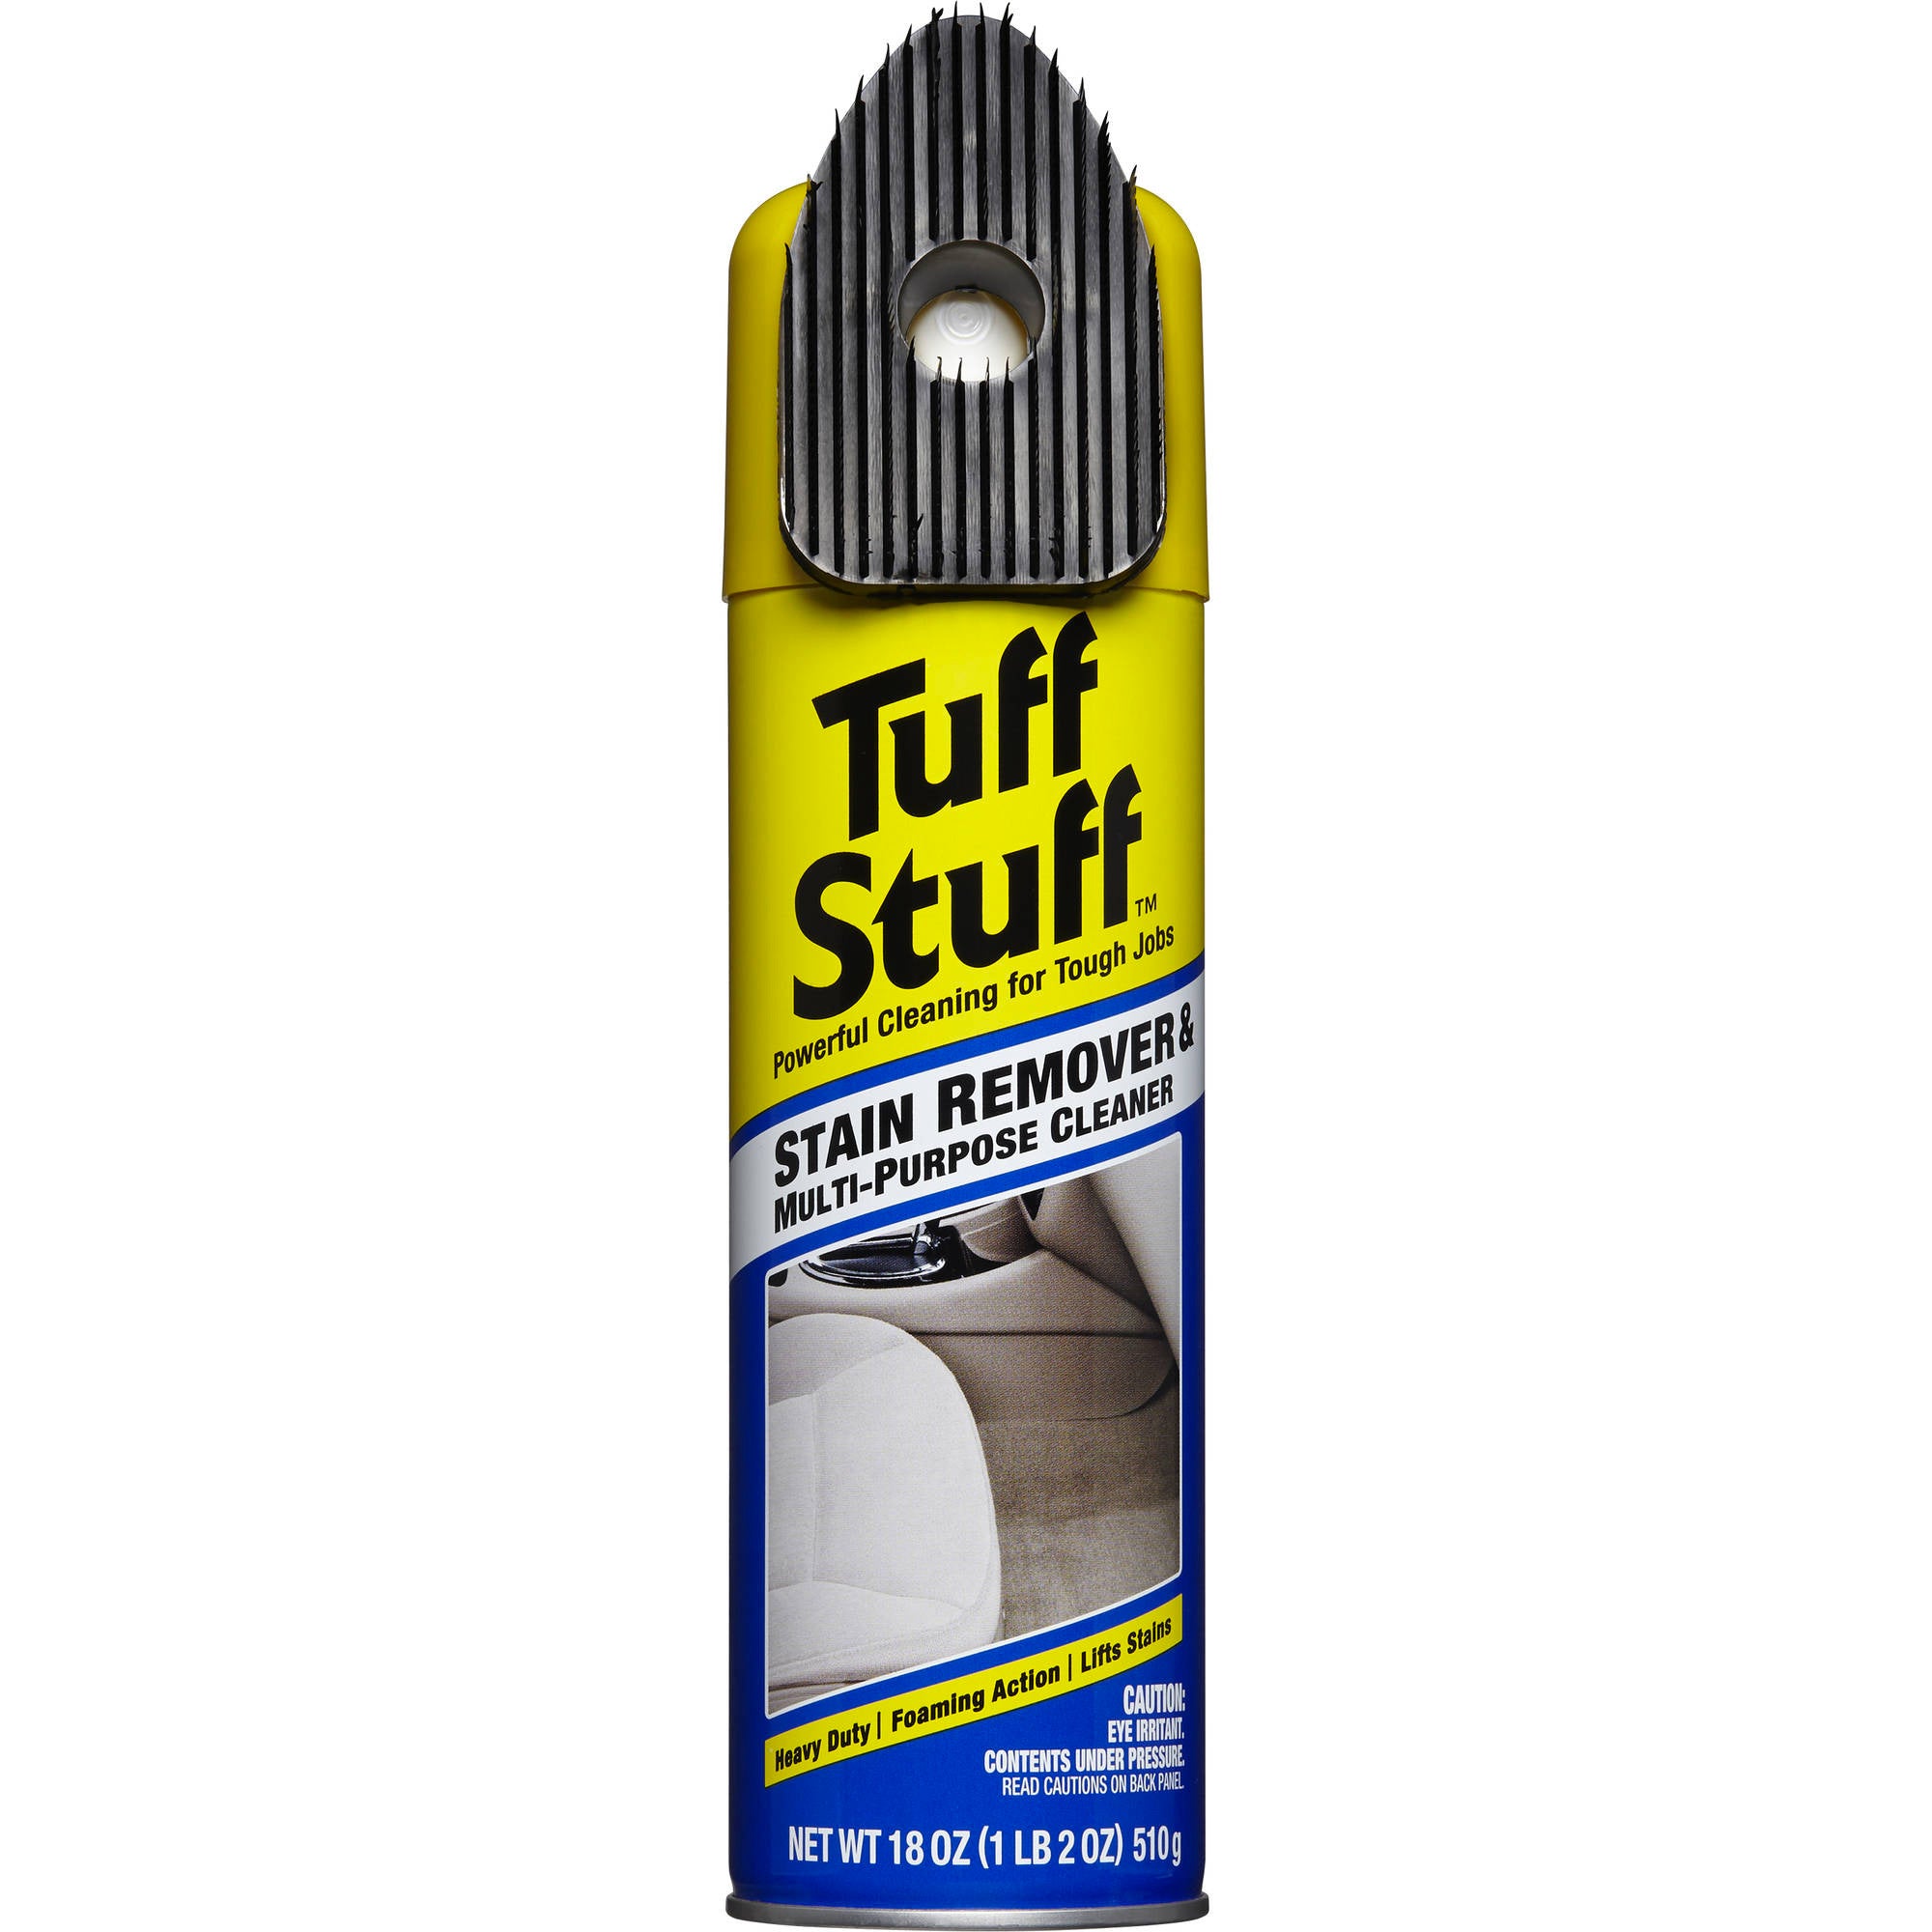 Tuff Stuff Multi Purpose Foam Cleaner for Deep Cleaning, 5 Pack (Foam Cleaner)